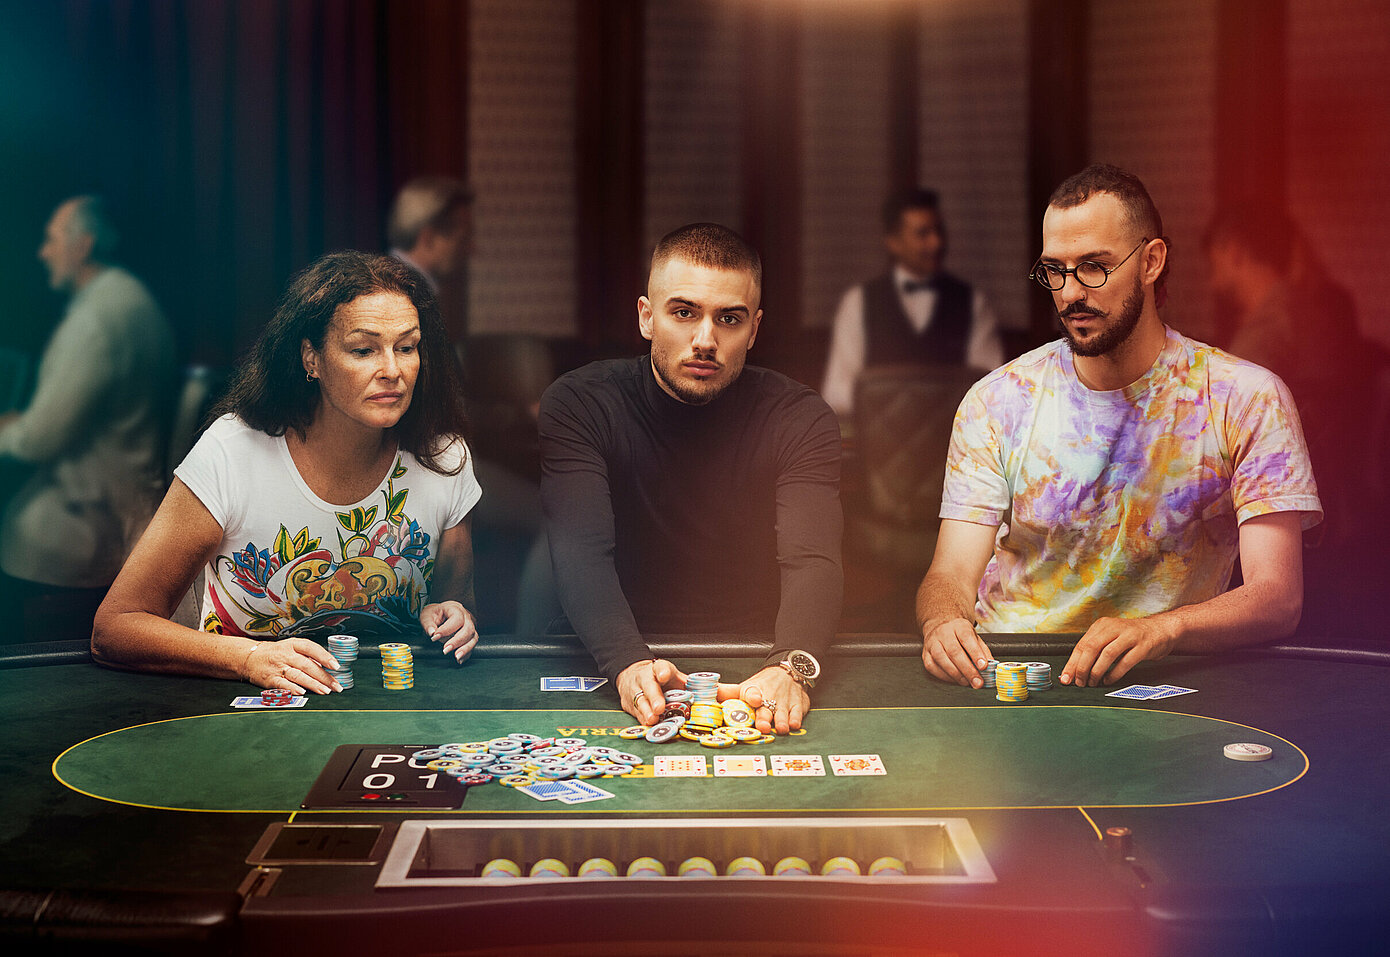 Gruppe bei Poker Turnier im Casino